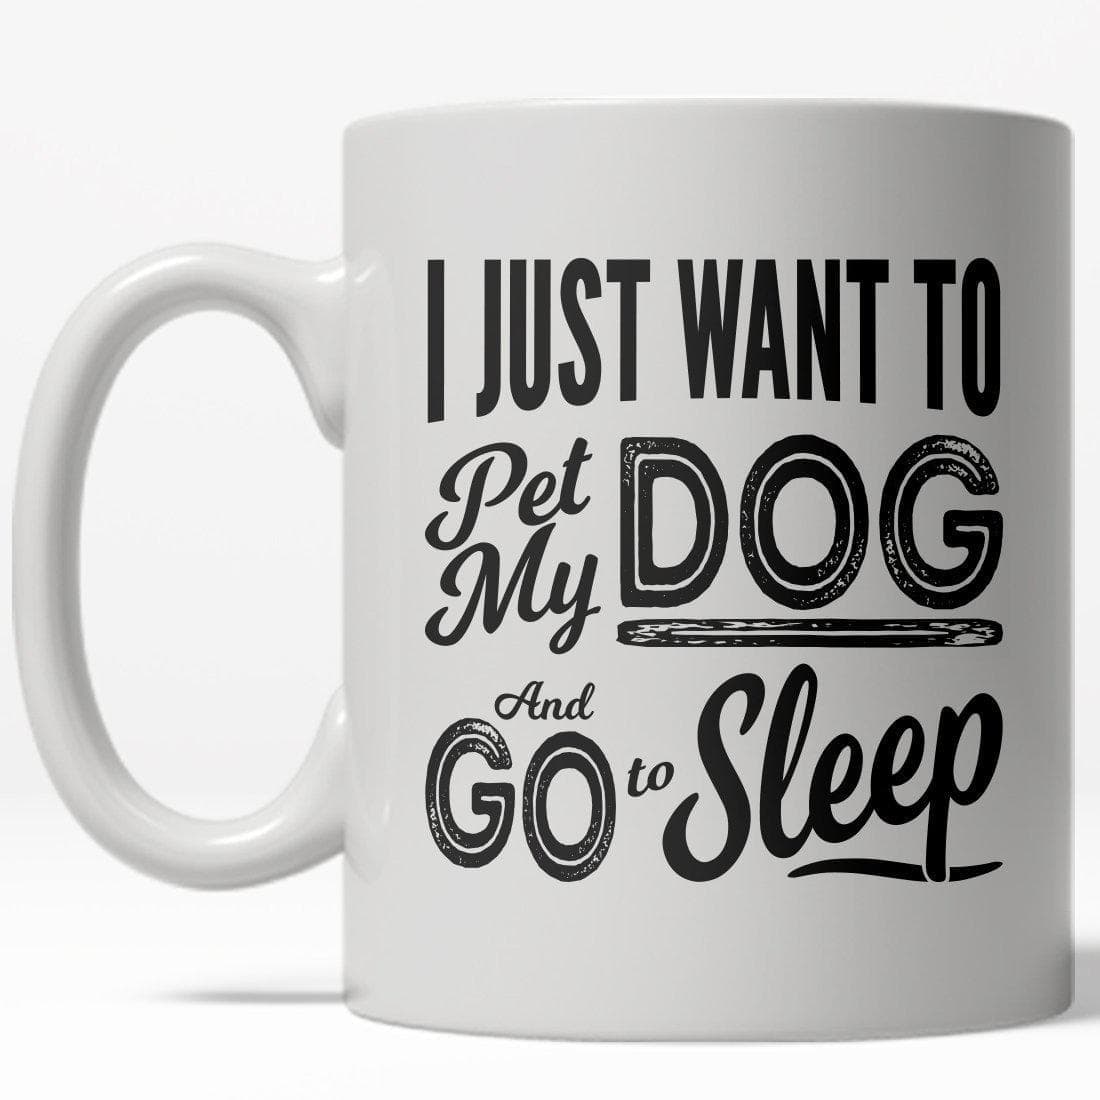 I Just Want To Pet My Dog And Go To Sleep Mug - Crazy Dog T-Shirts